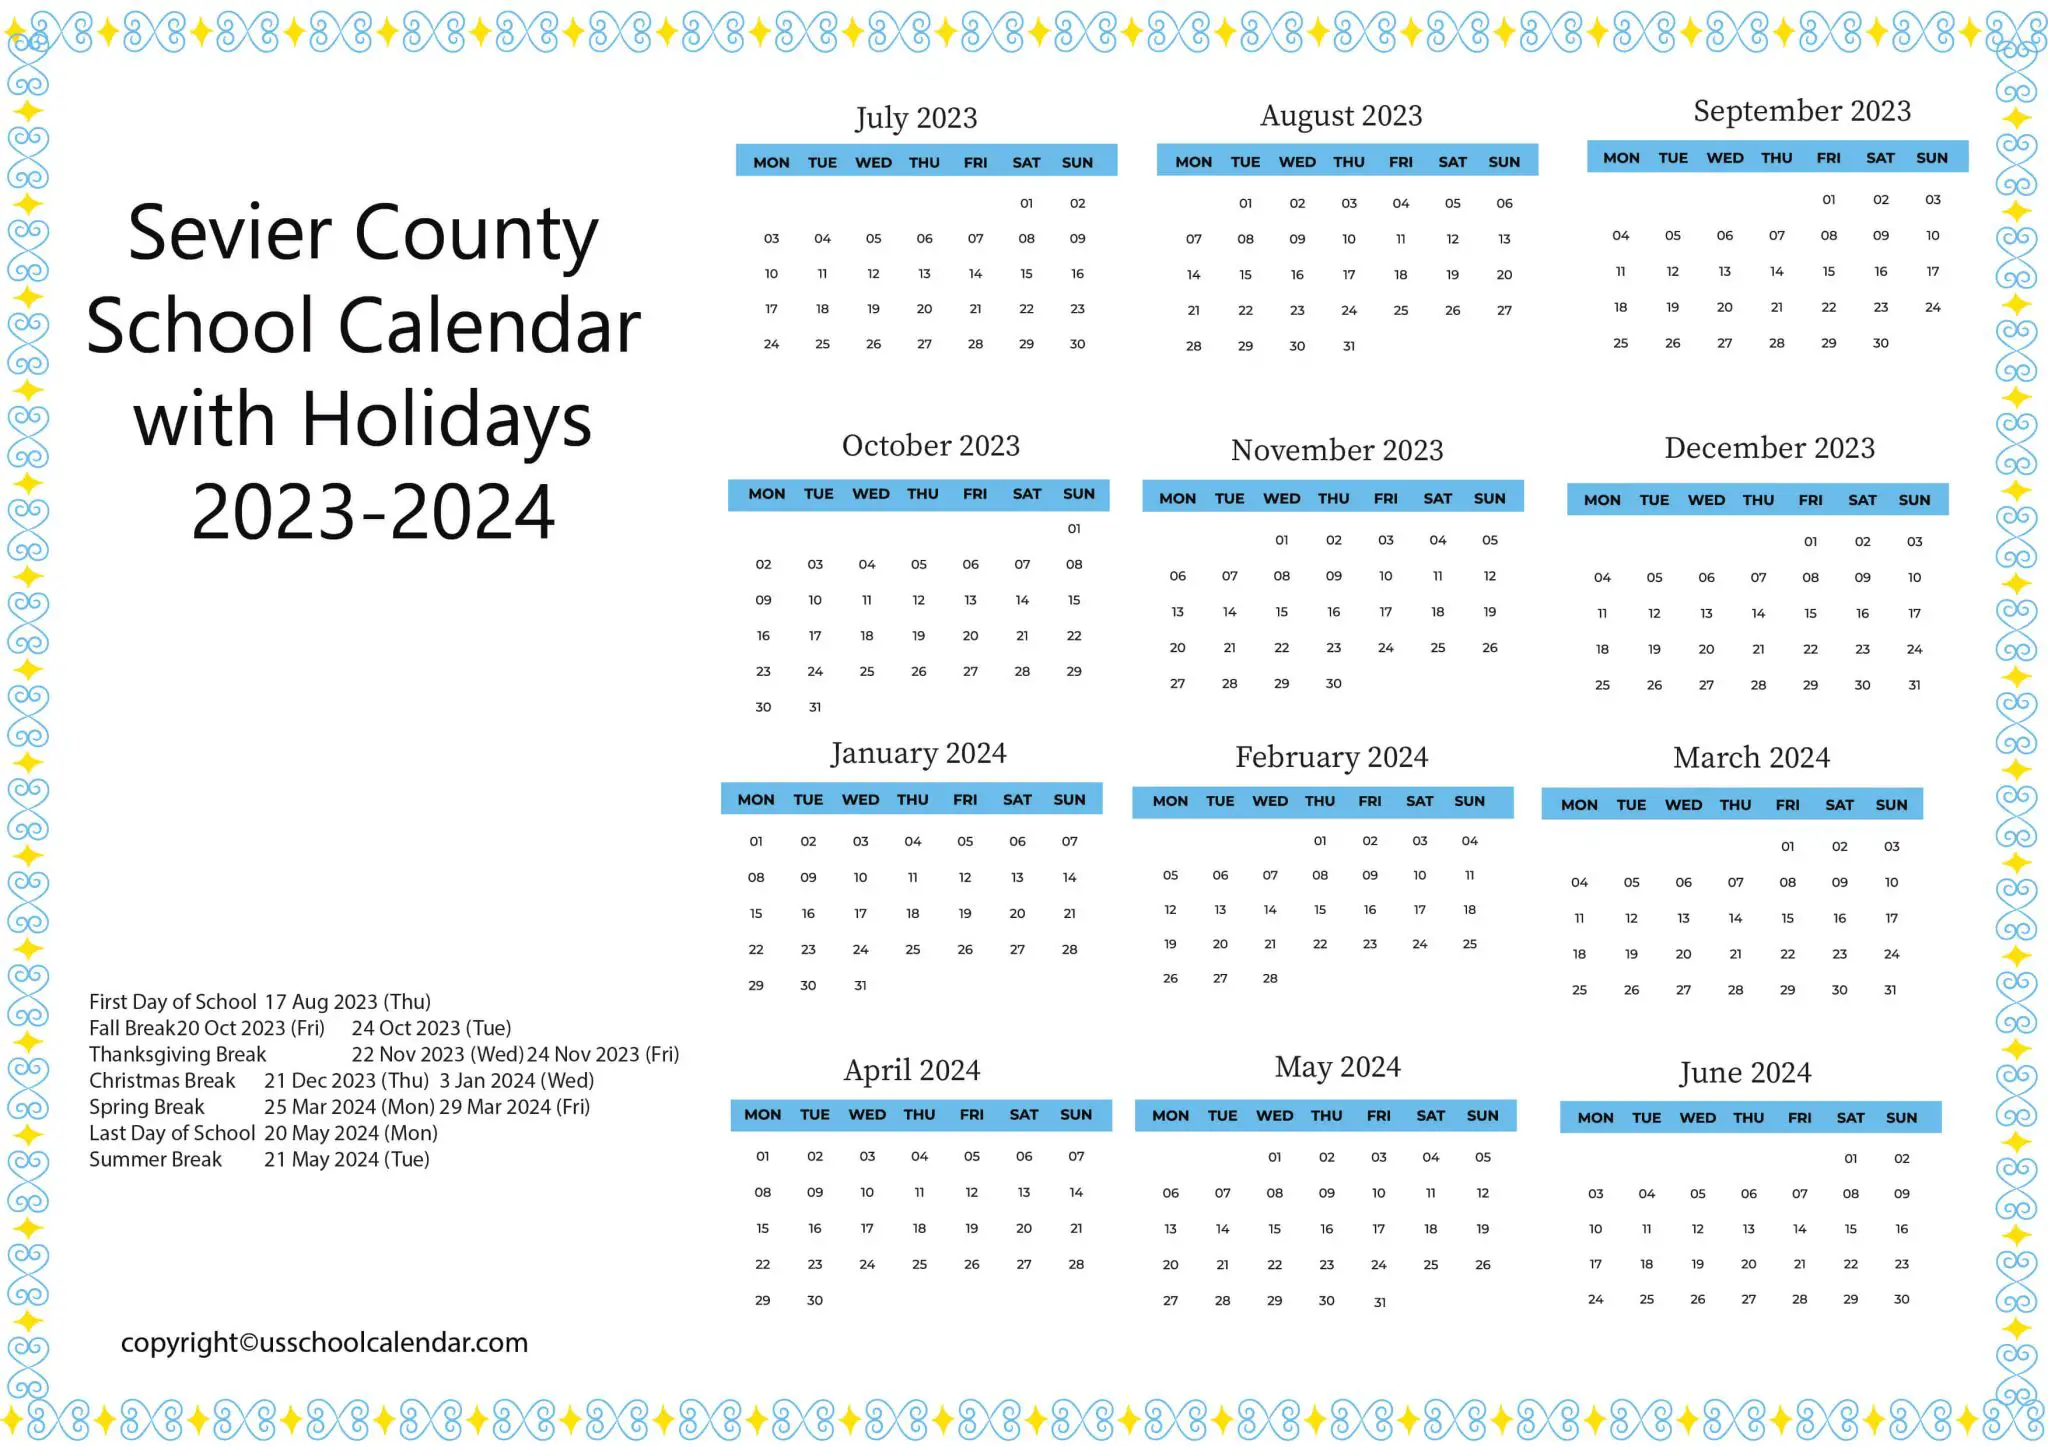 sevier-county-school-calendar-with-holidays-2023-2024